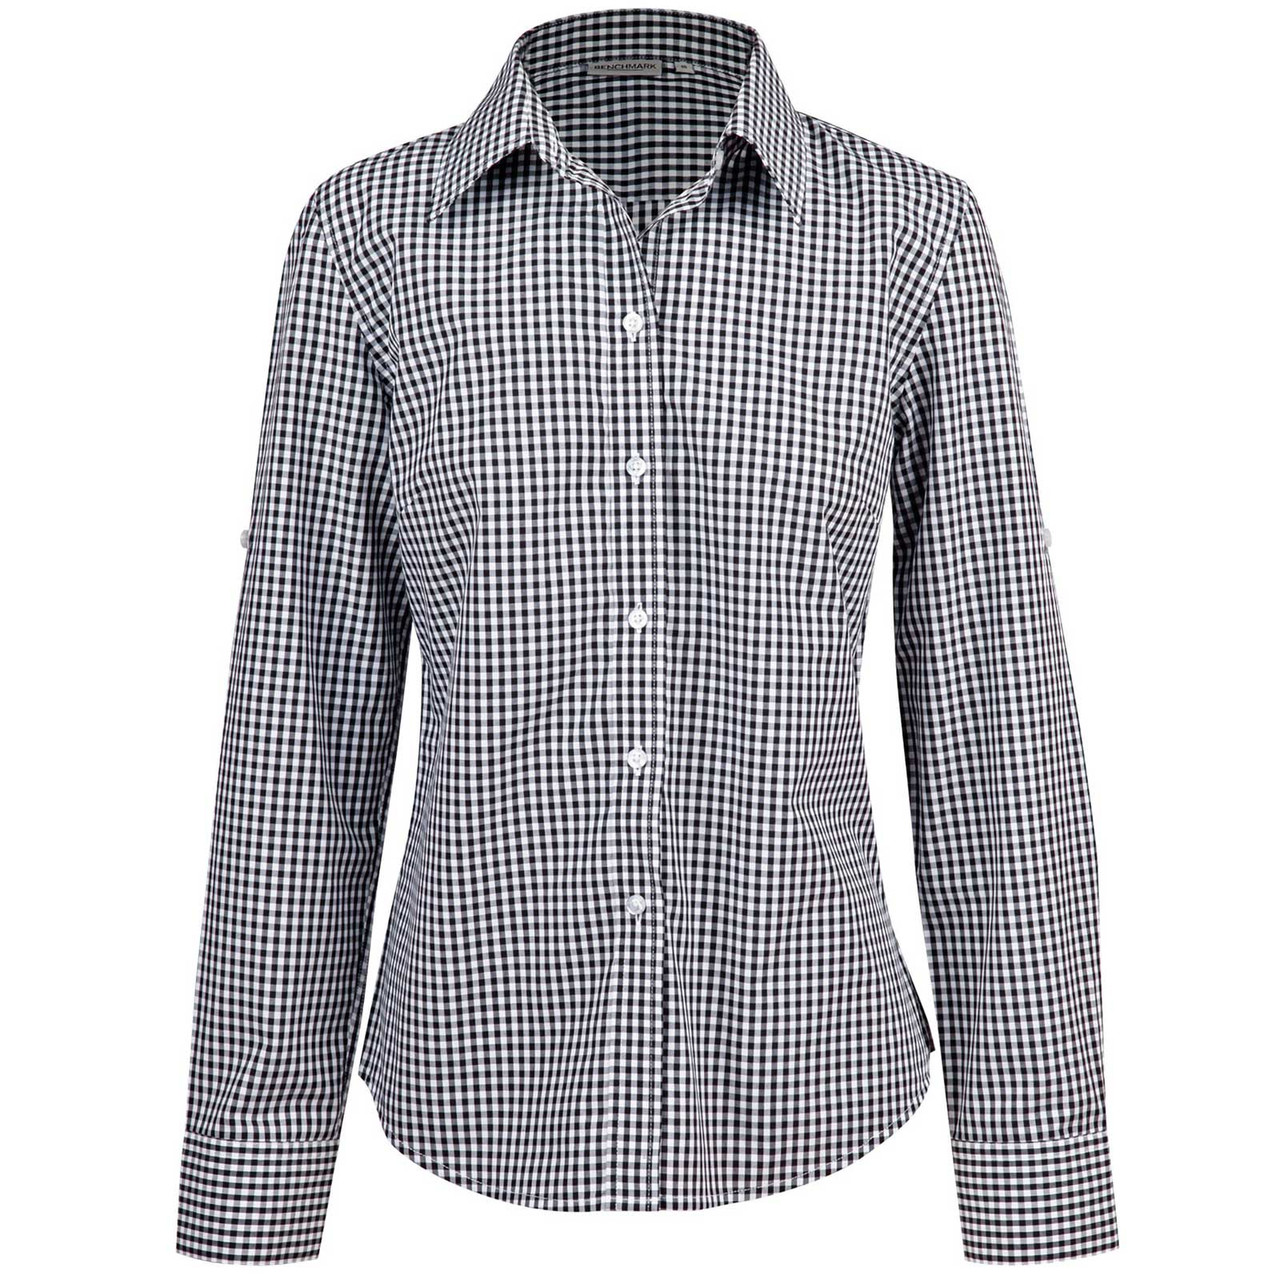 Ladies Gingham Checkered Short Sleeve Shirt | Shop Business Shirts Online